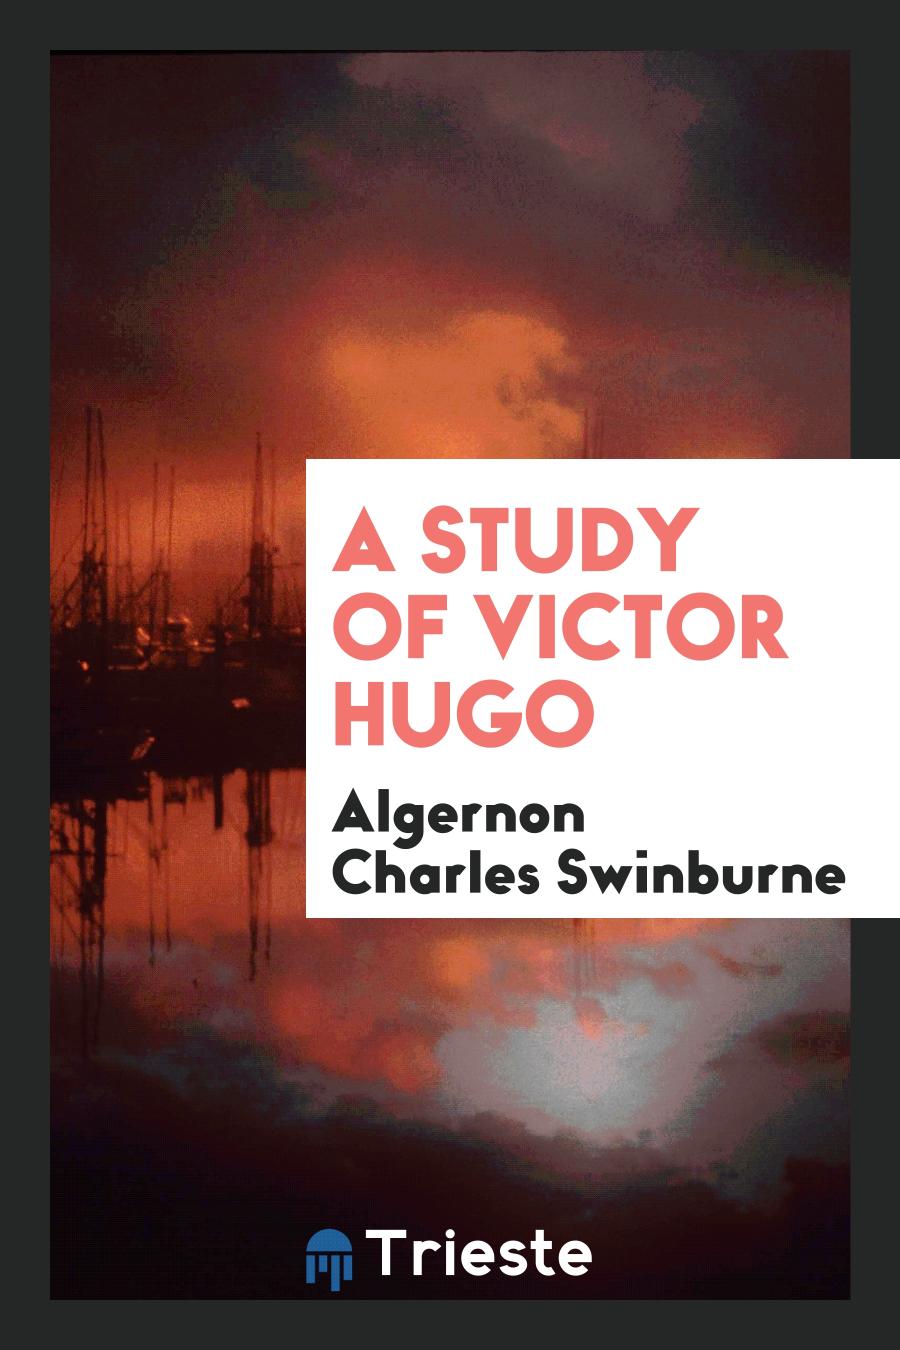 A Study of Victor Hugo